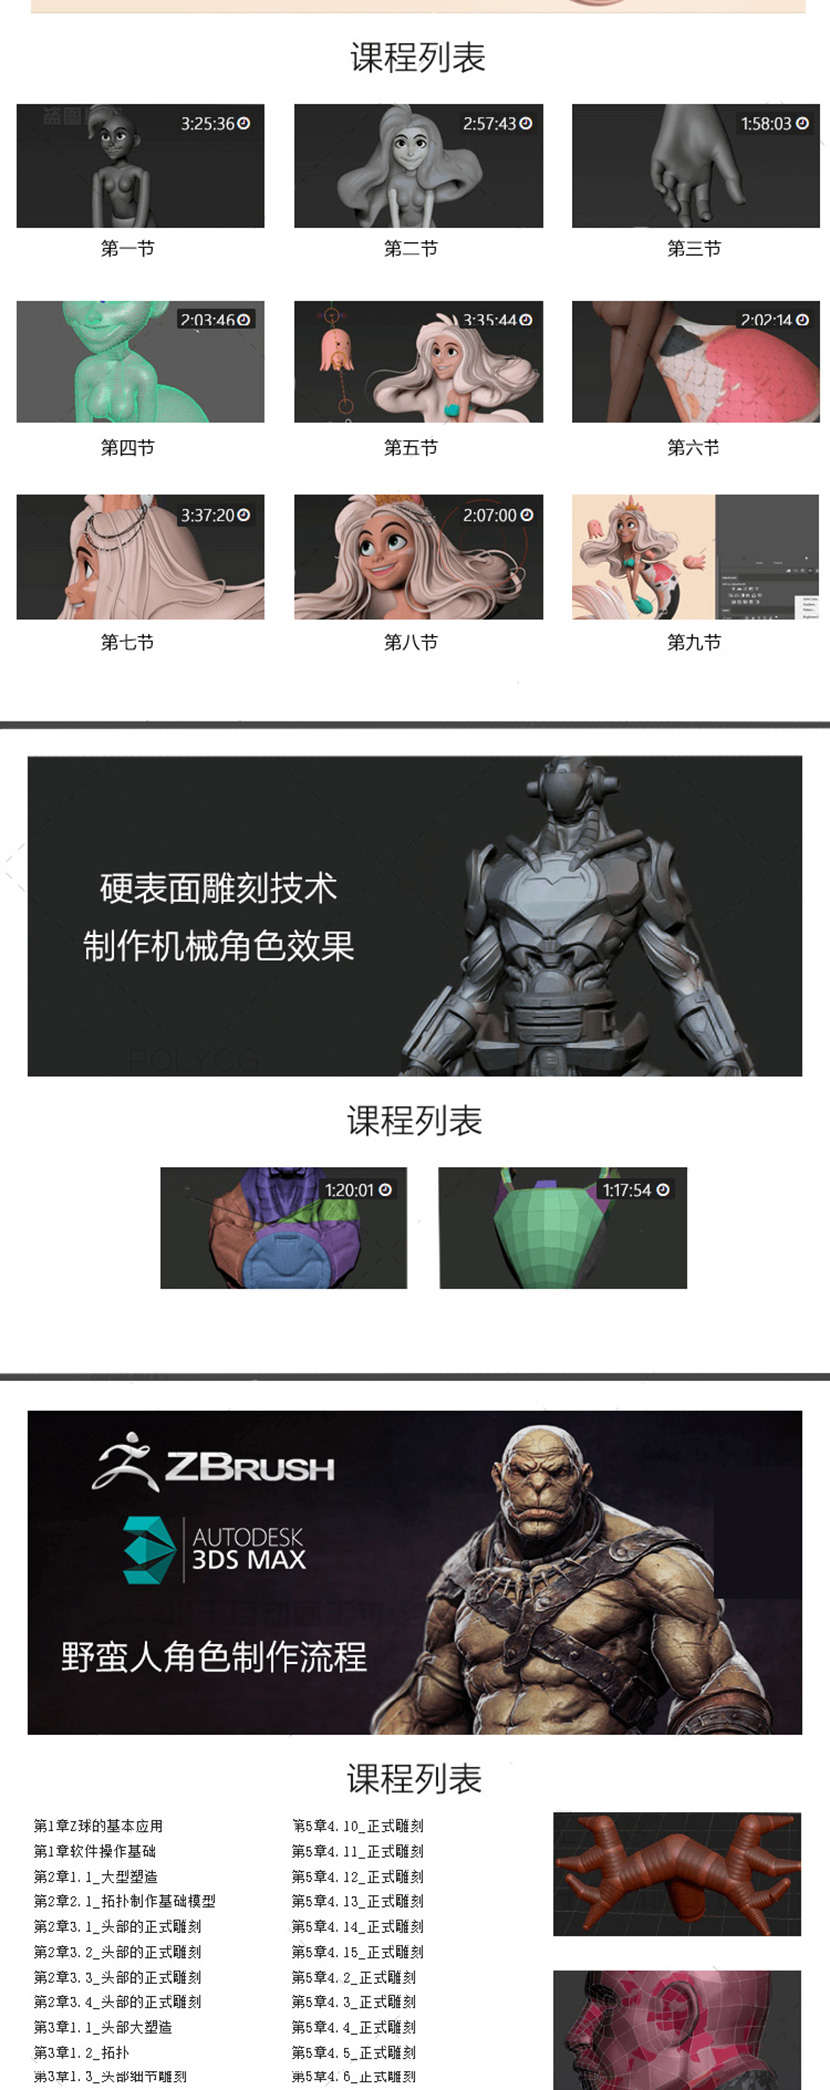 ZBrush教程新中文雕刻设计素材视频4r7 4r8 2019硬表面建模zb笔刷